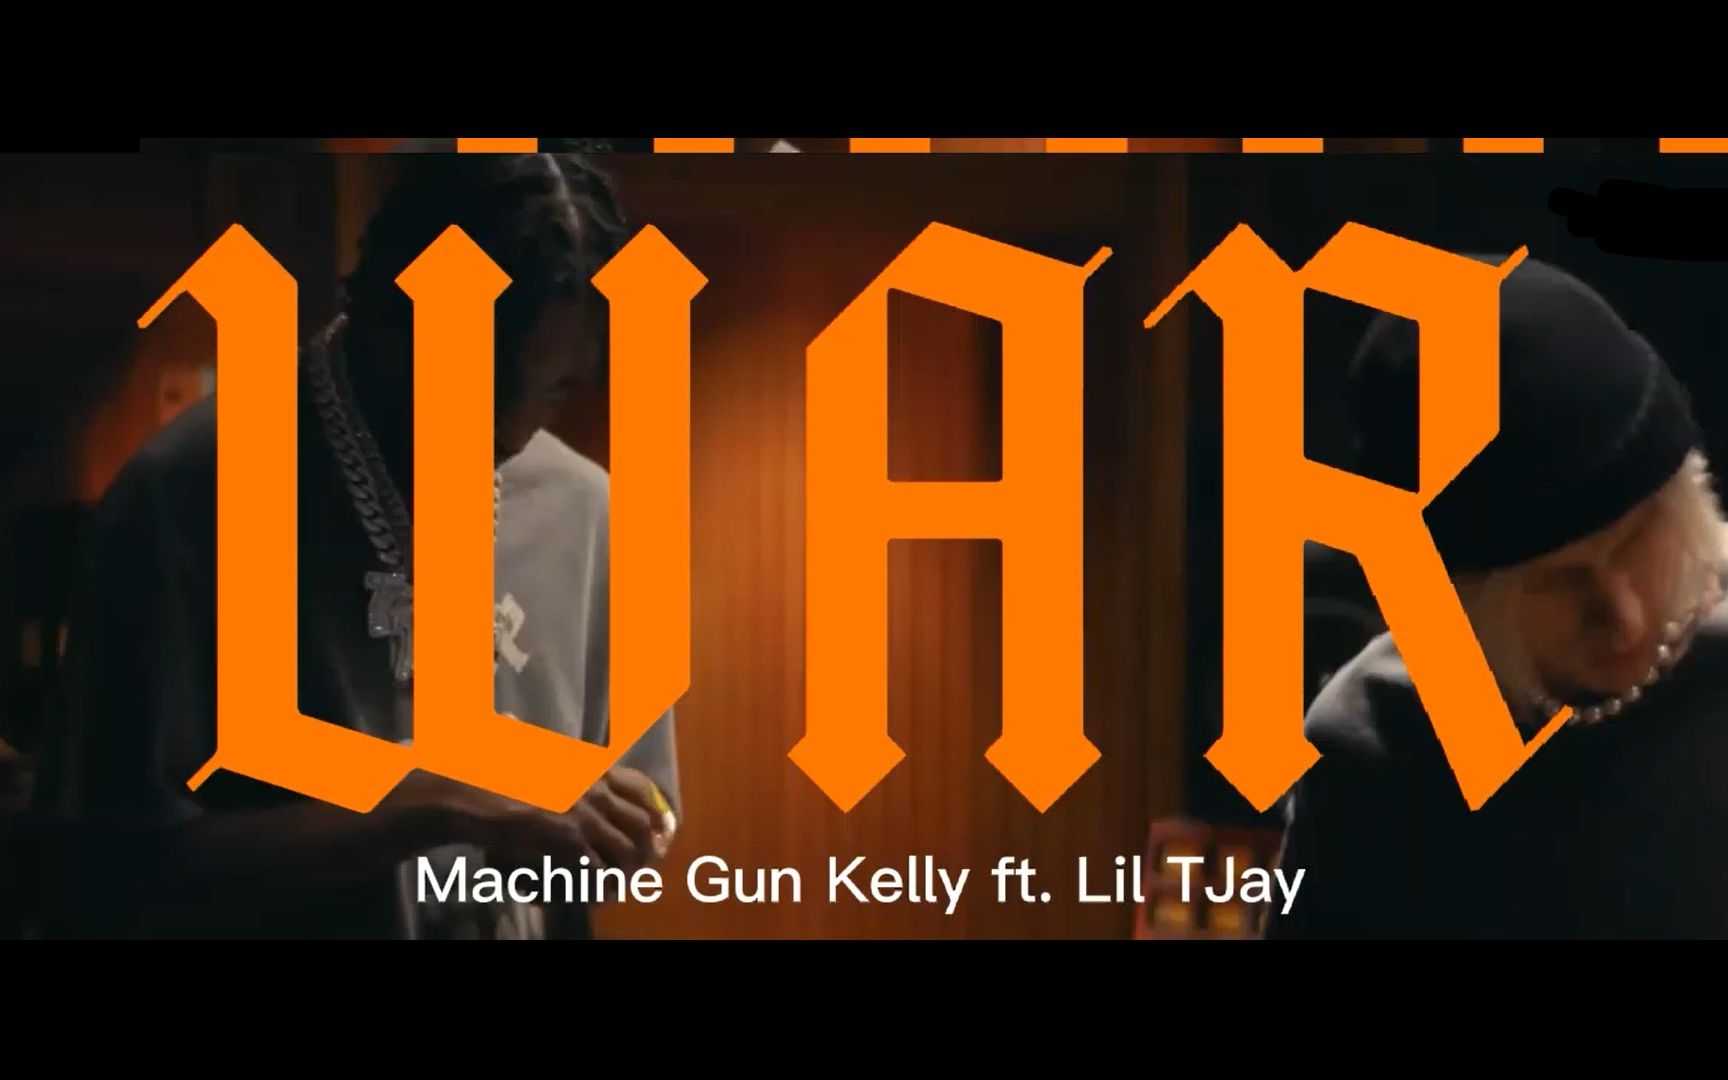 [英语歌词]MGK和Lil Tjay合作新歌《WAR》，Studio片段